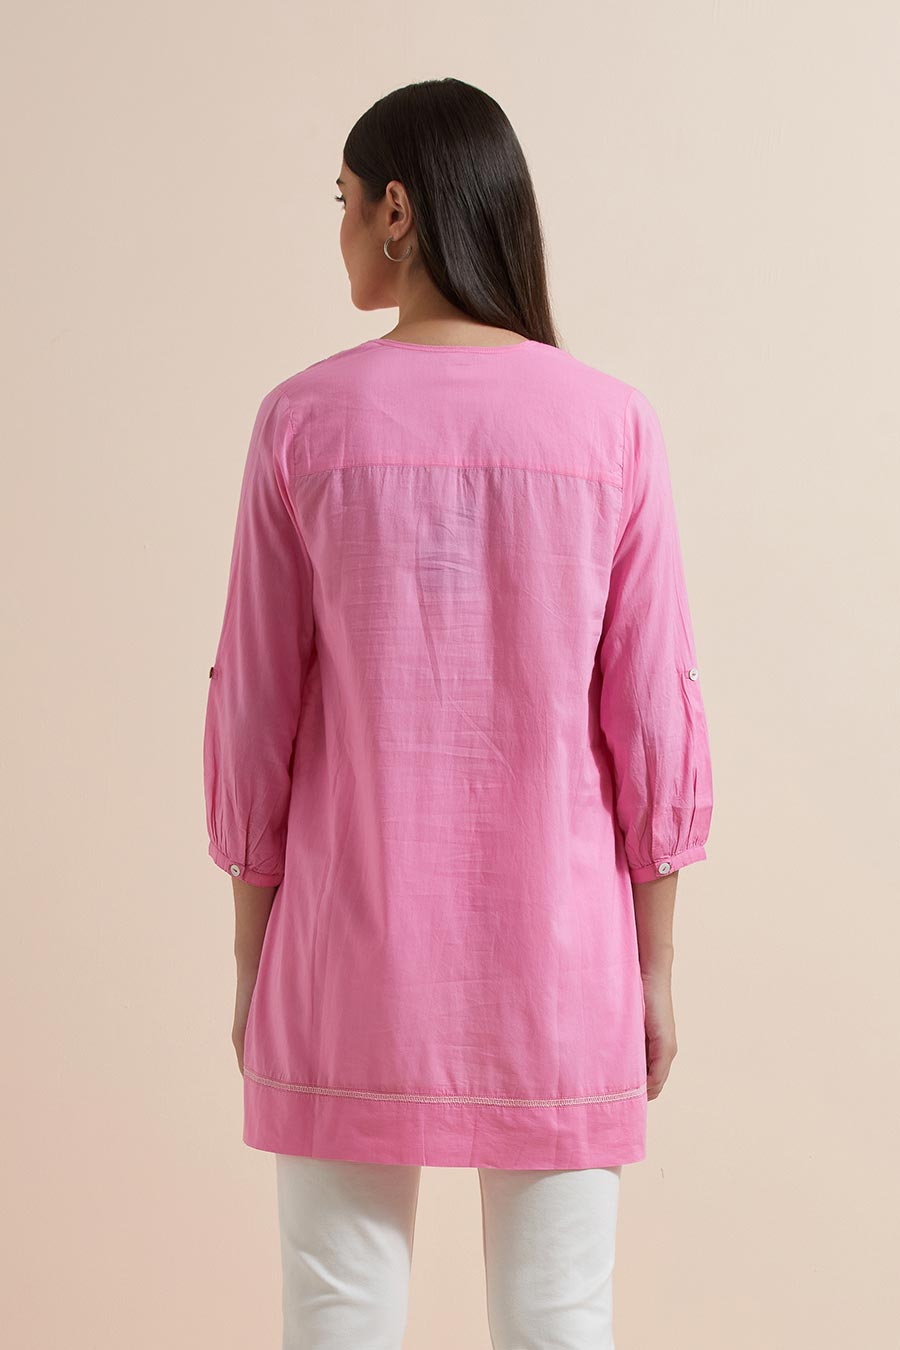 Fuchsia Cotton Sequin Embroidered Top